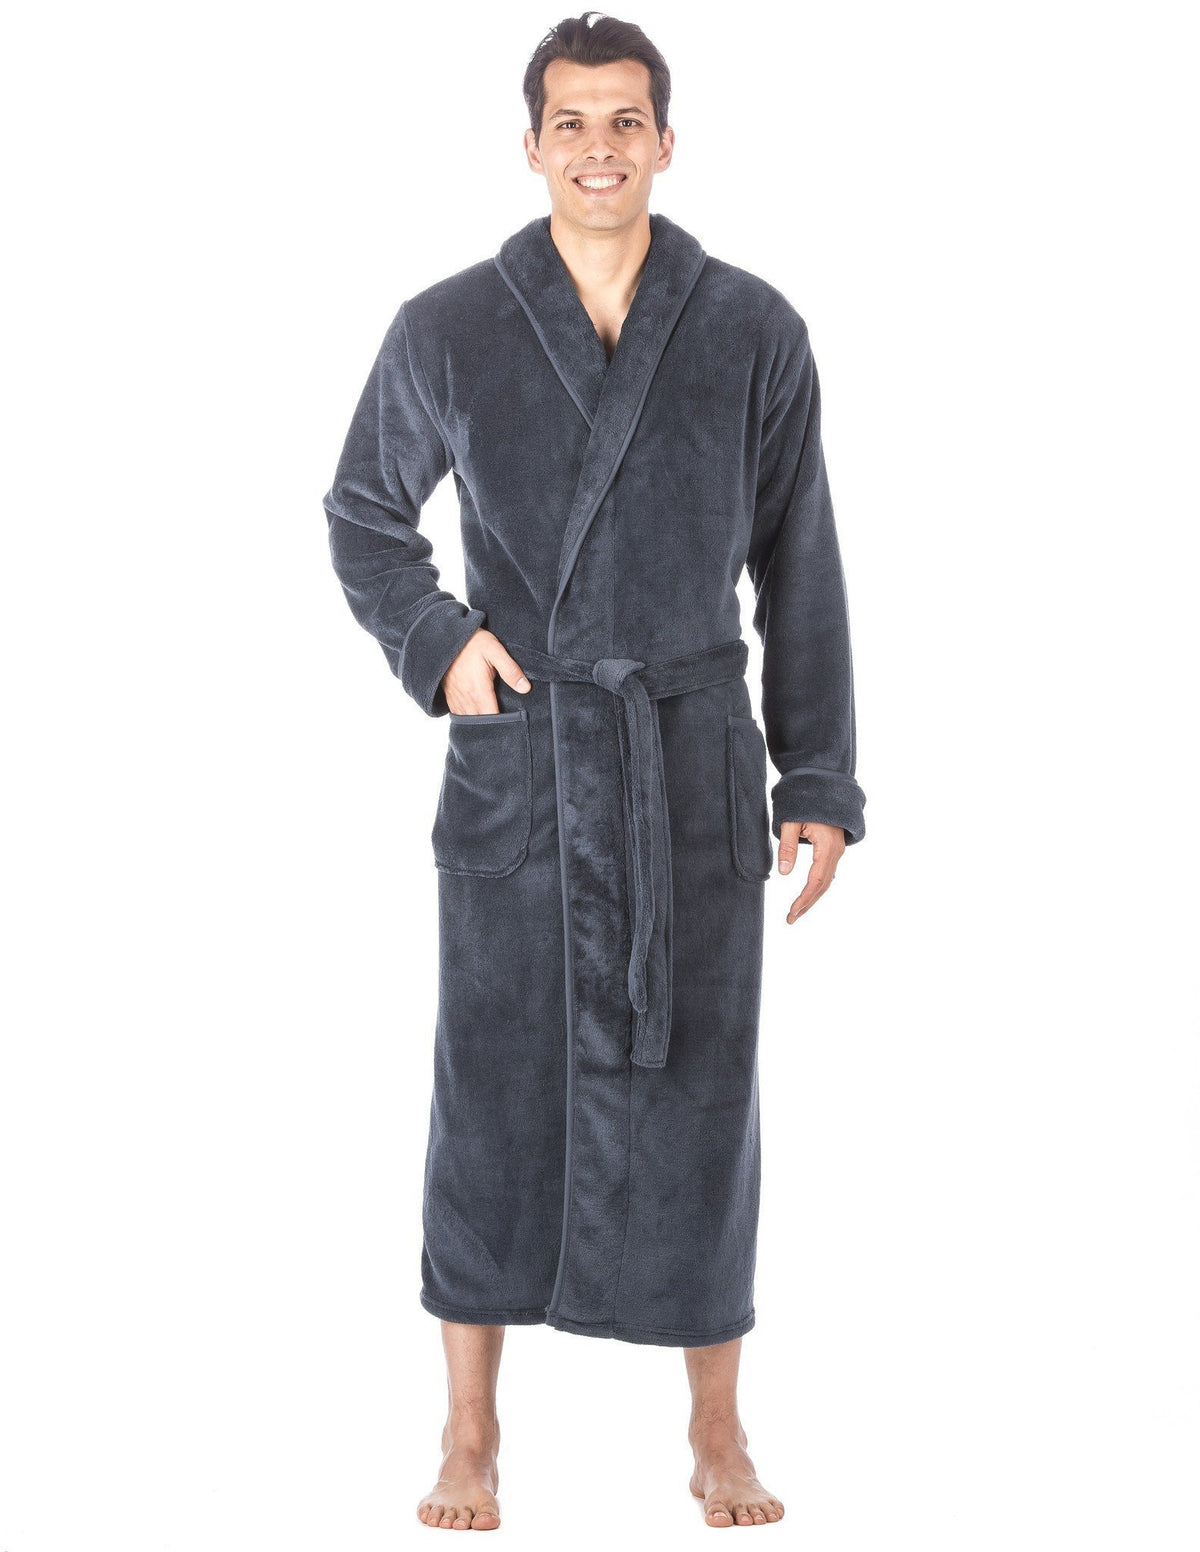 Men's Premium Coral Fleece Long Hooded Plush Spa/Bath Robe - Navy